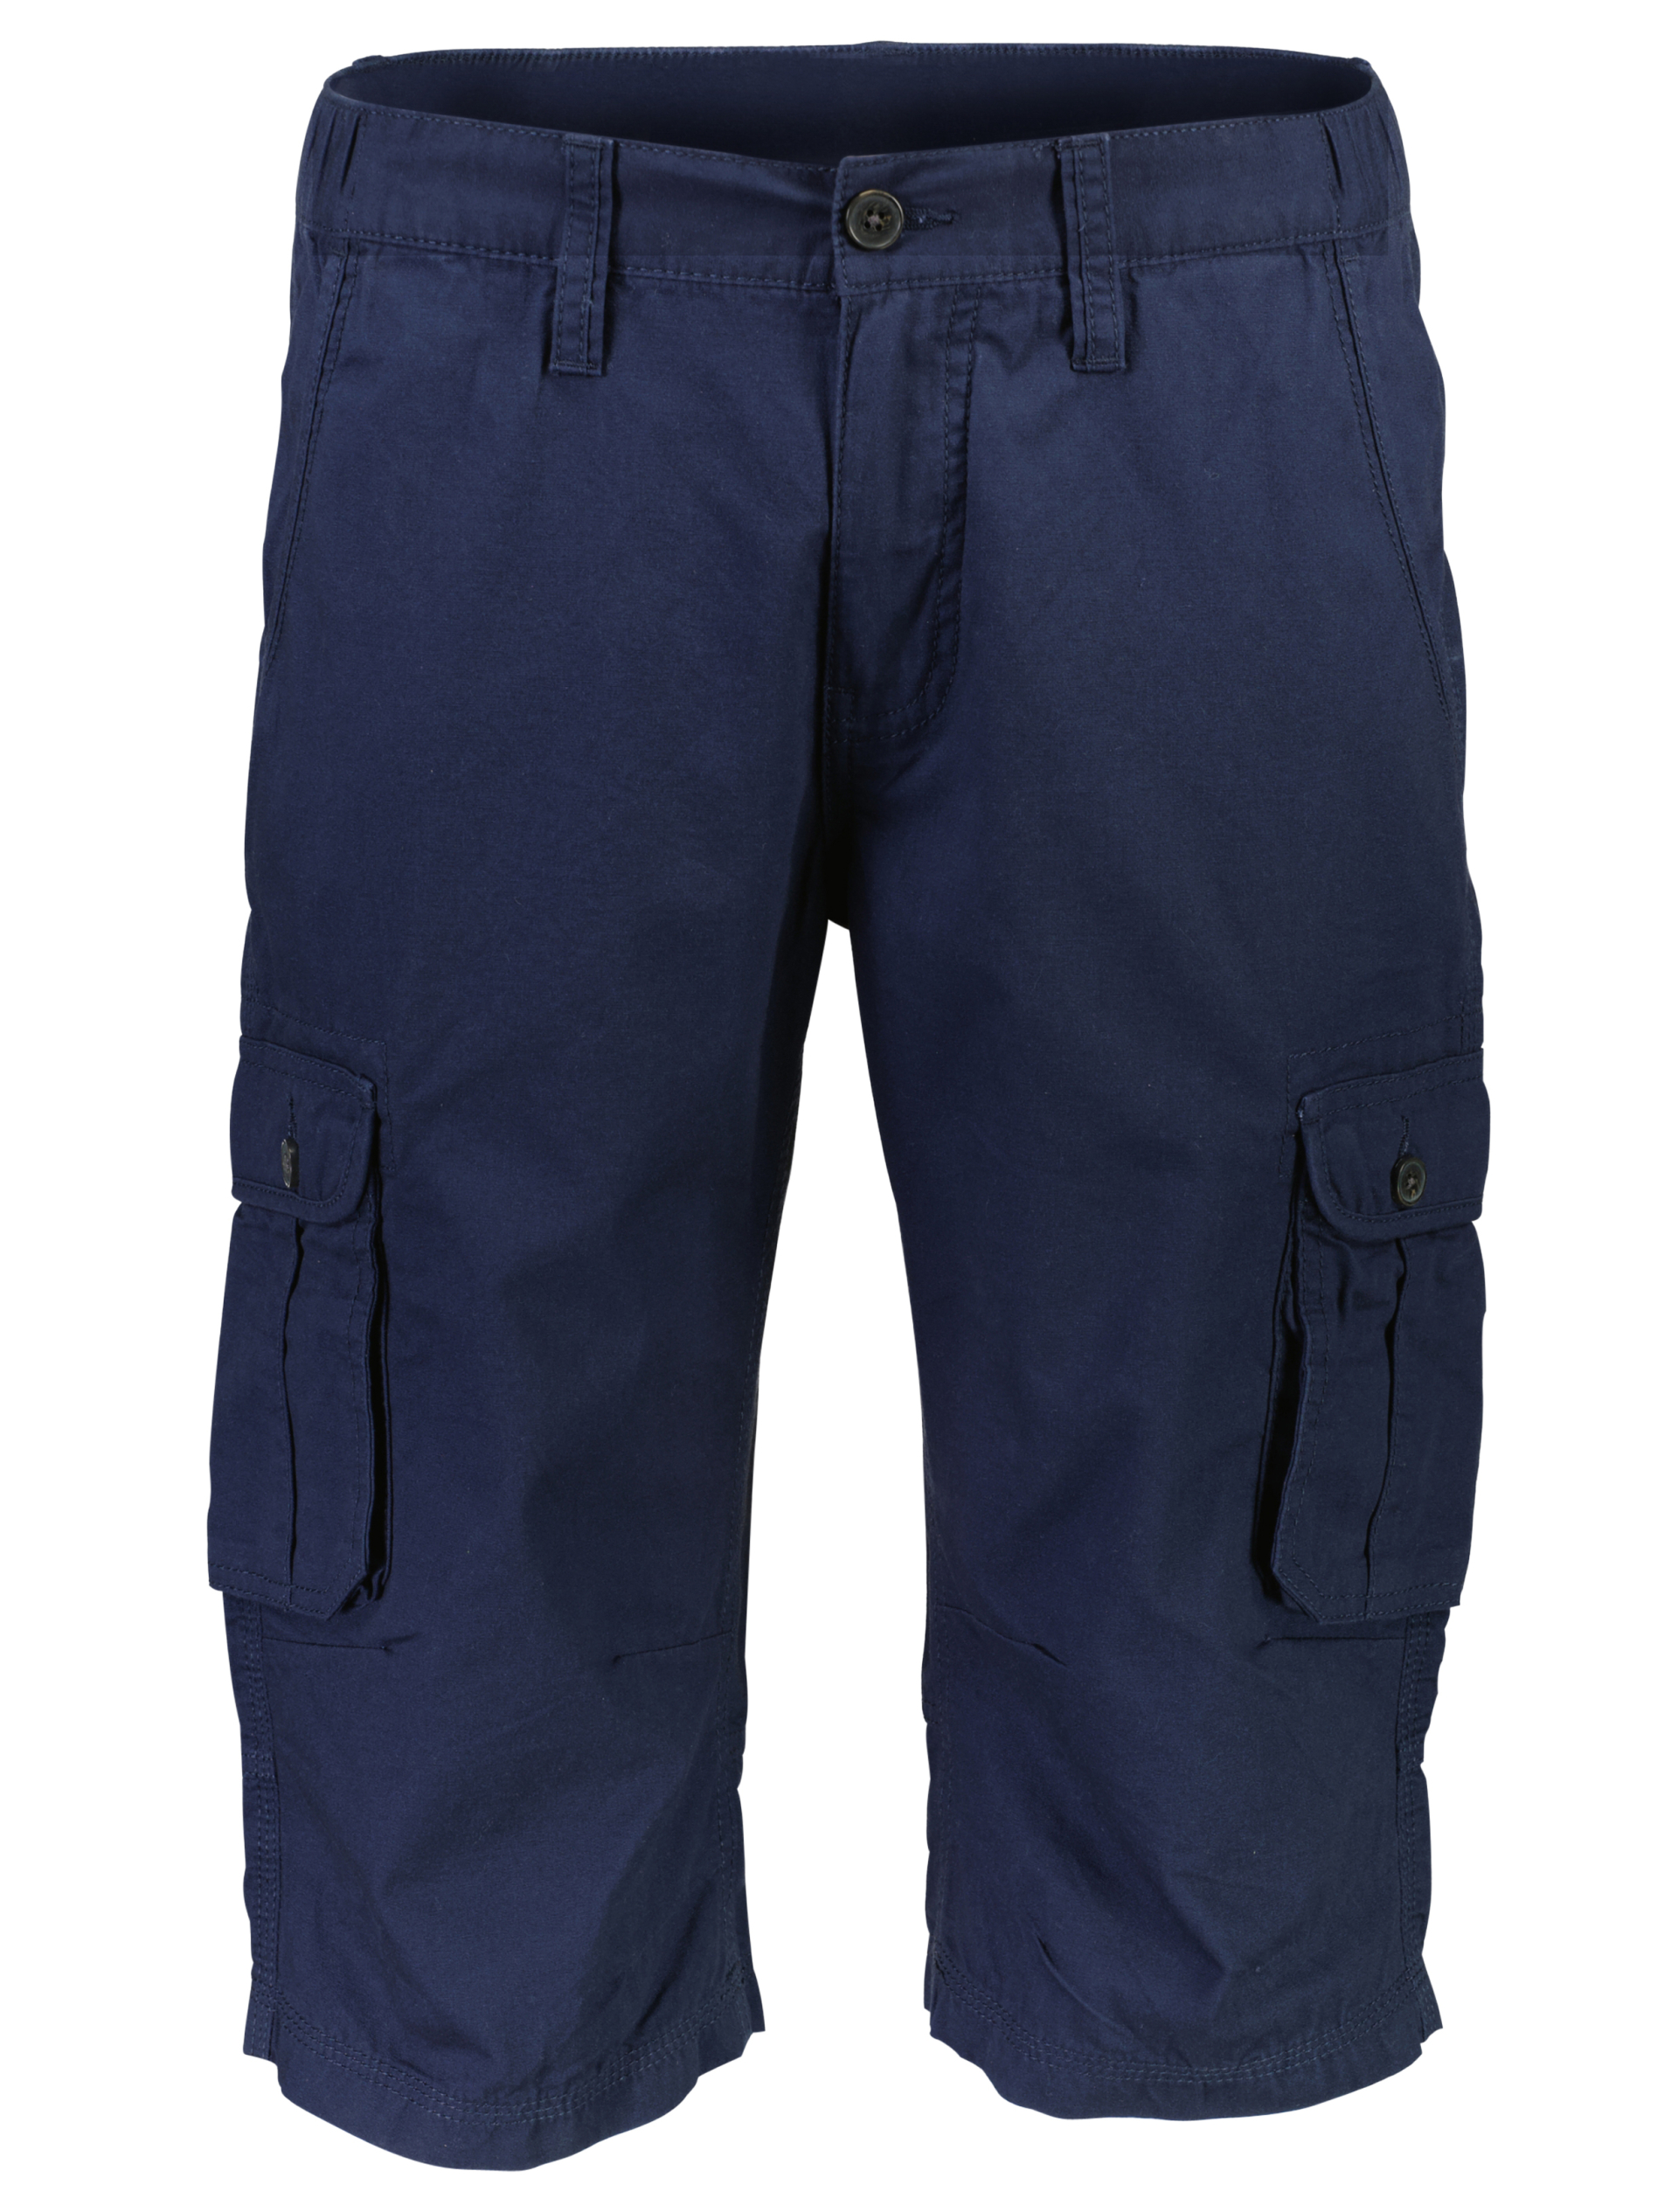 Jack's Cargo shorts blå / navy